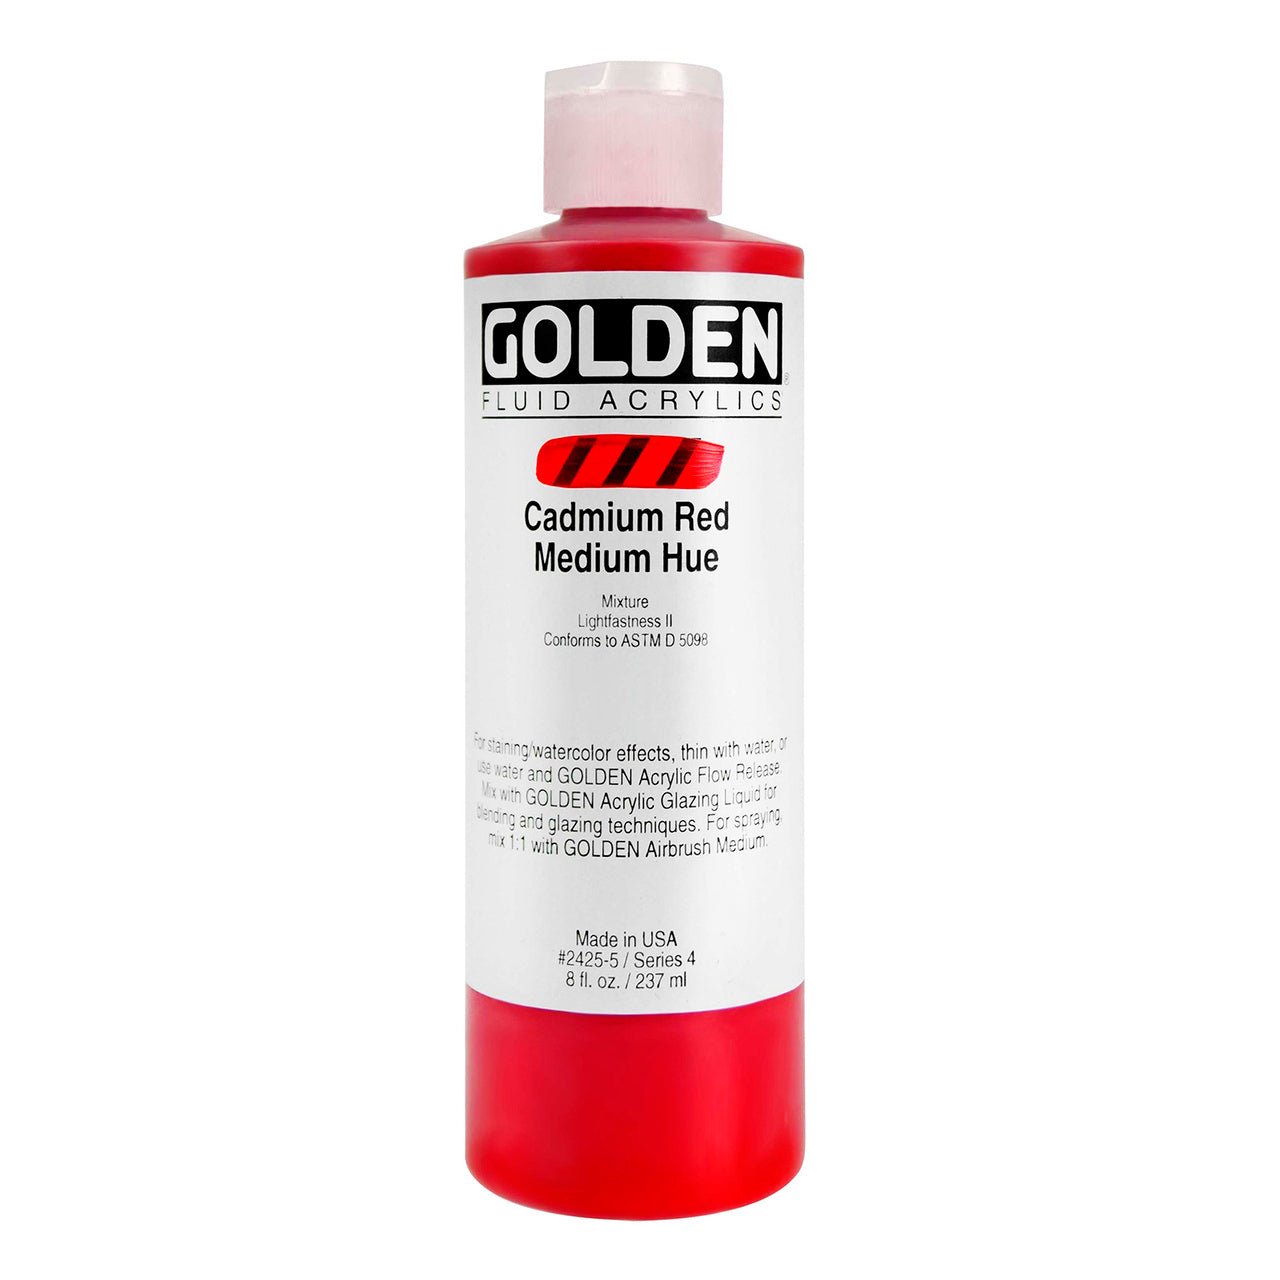 Golden Fluid Acrylic Cadmium Red Medium Hue 8 oz - merriartist.com